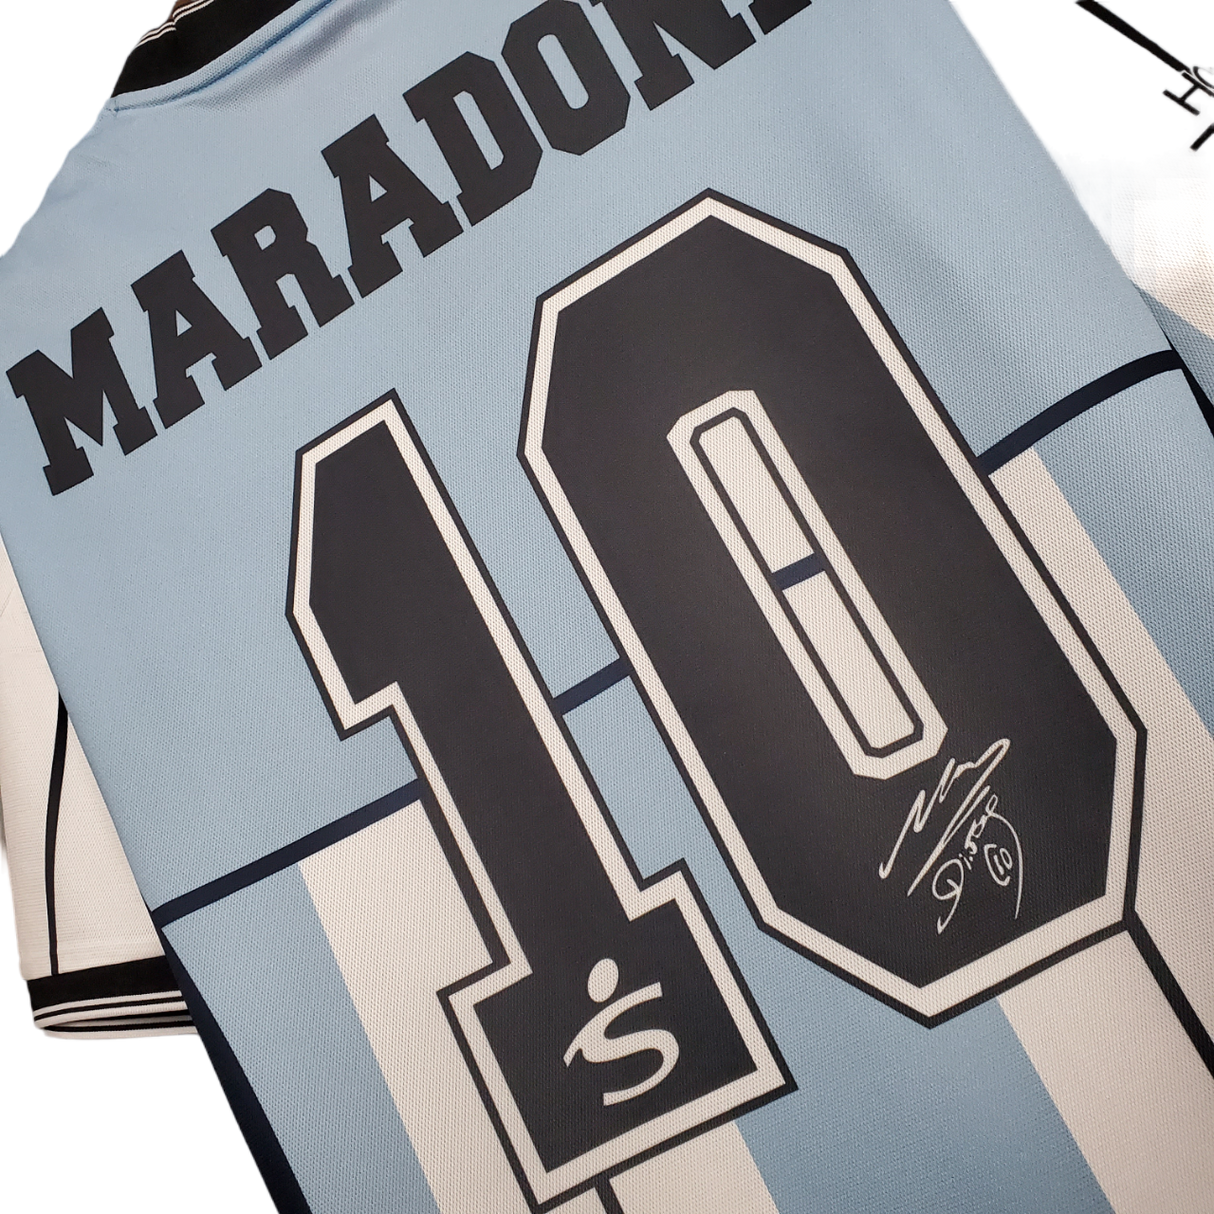 Argentina Retro 2001 Maradona #10 Commemorative Edition